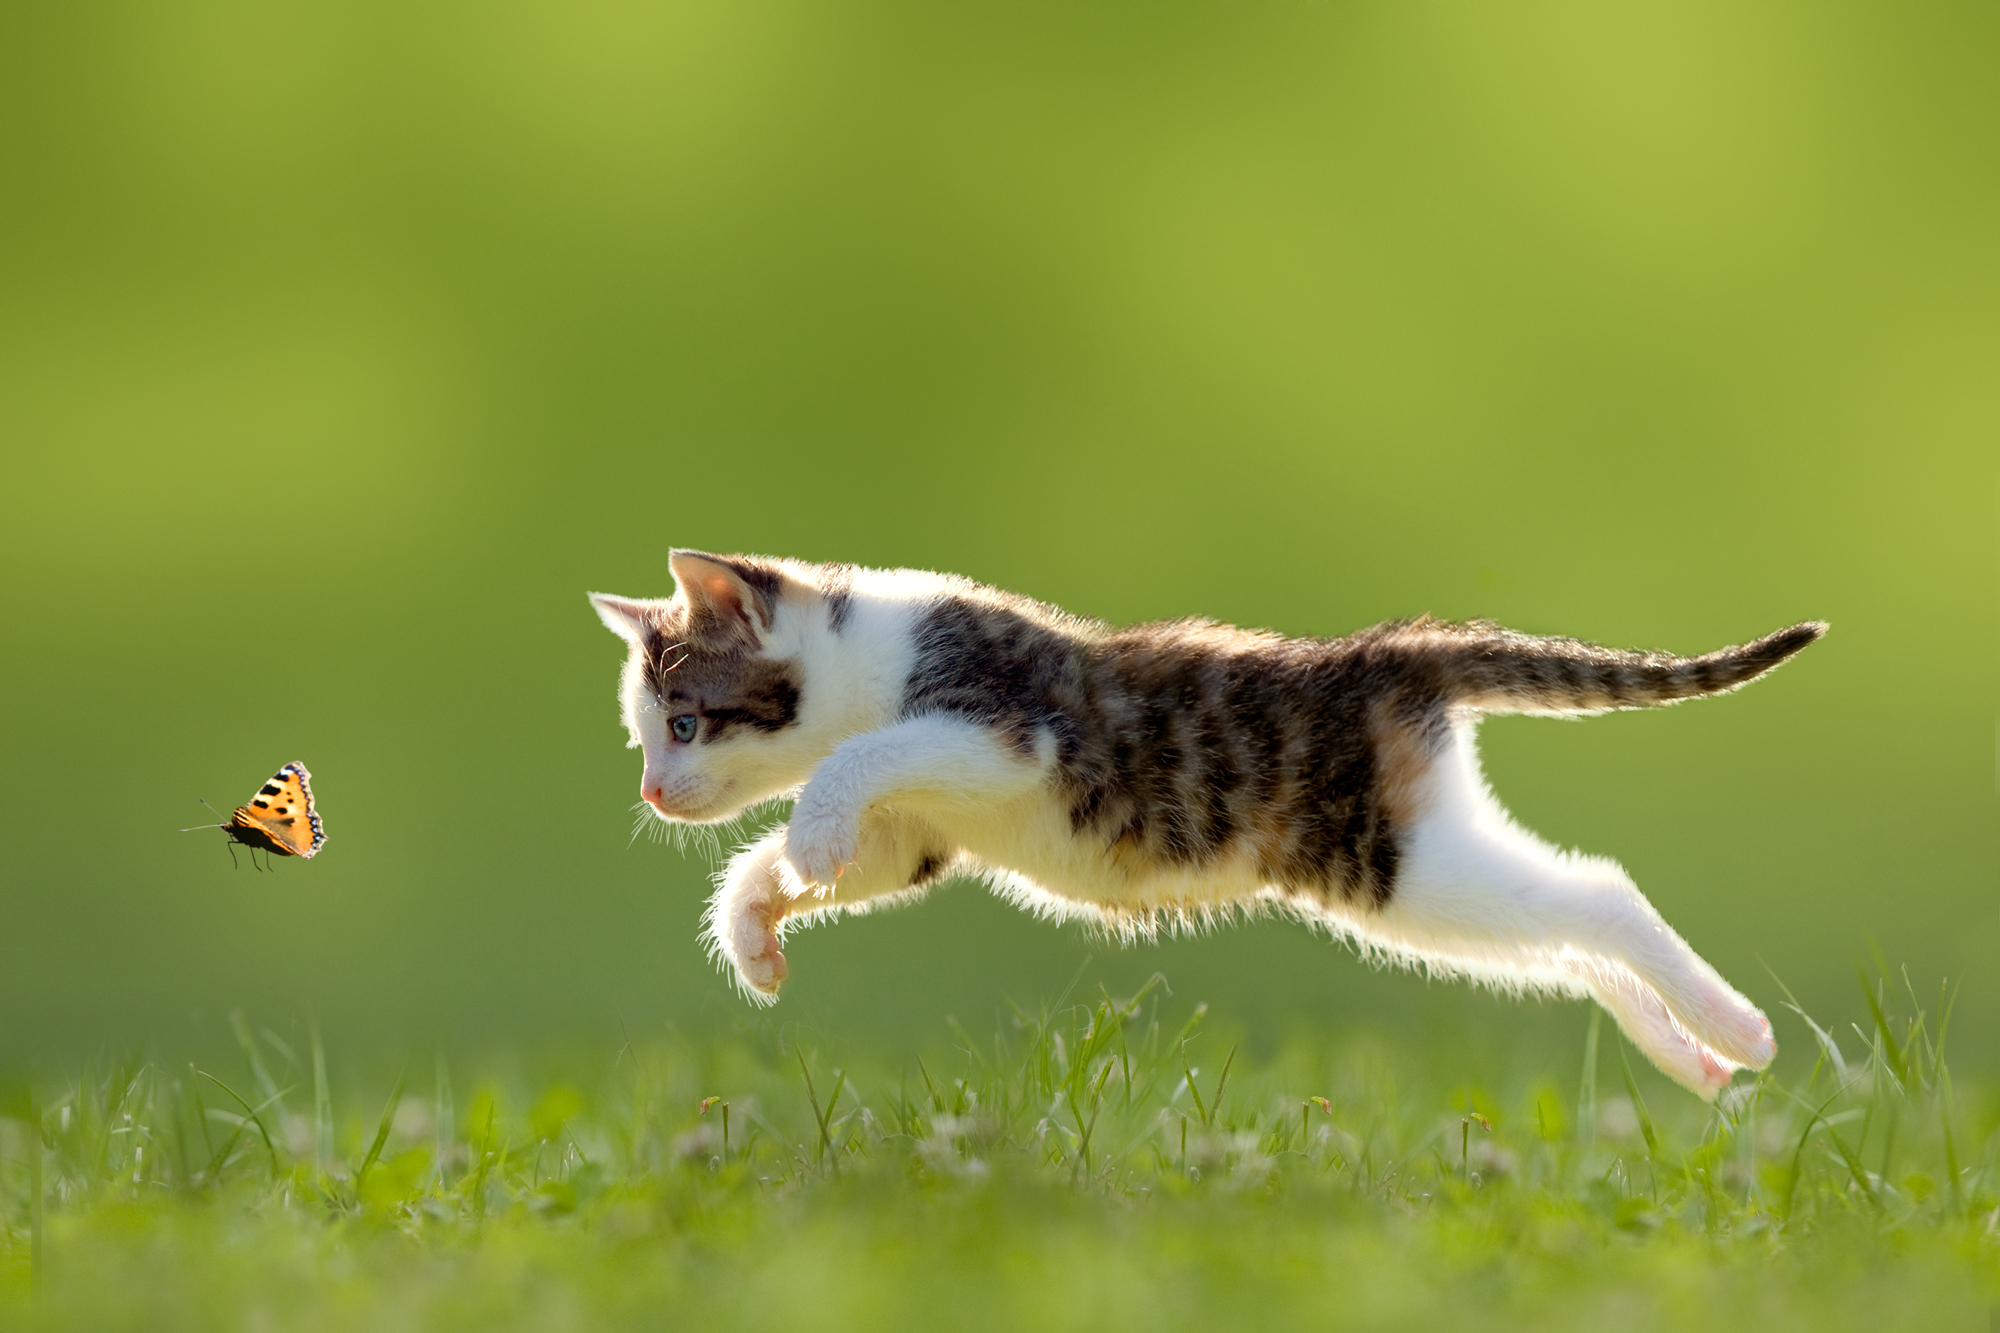 A kitten chasing a butterfly in a grassy garden